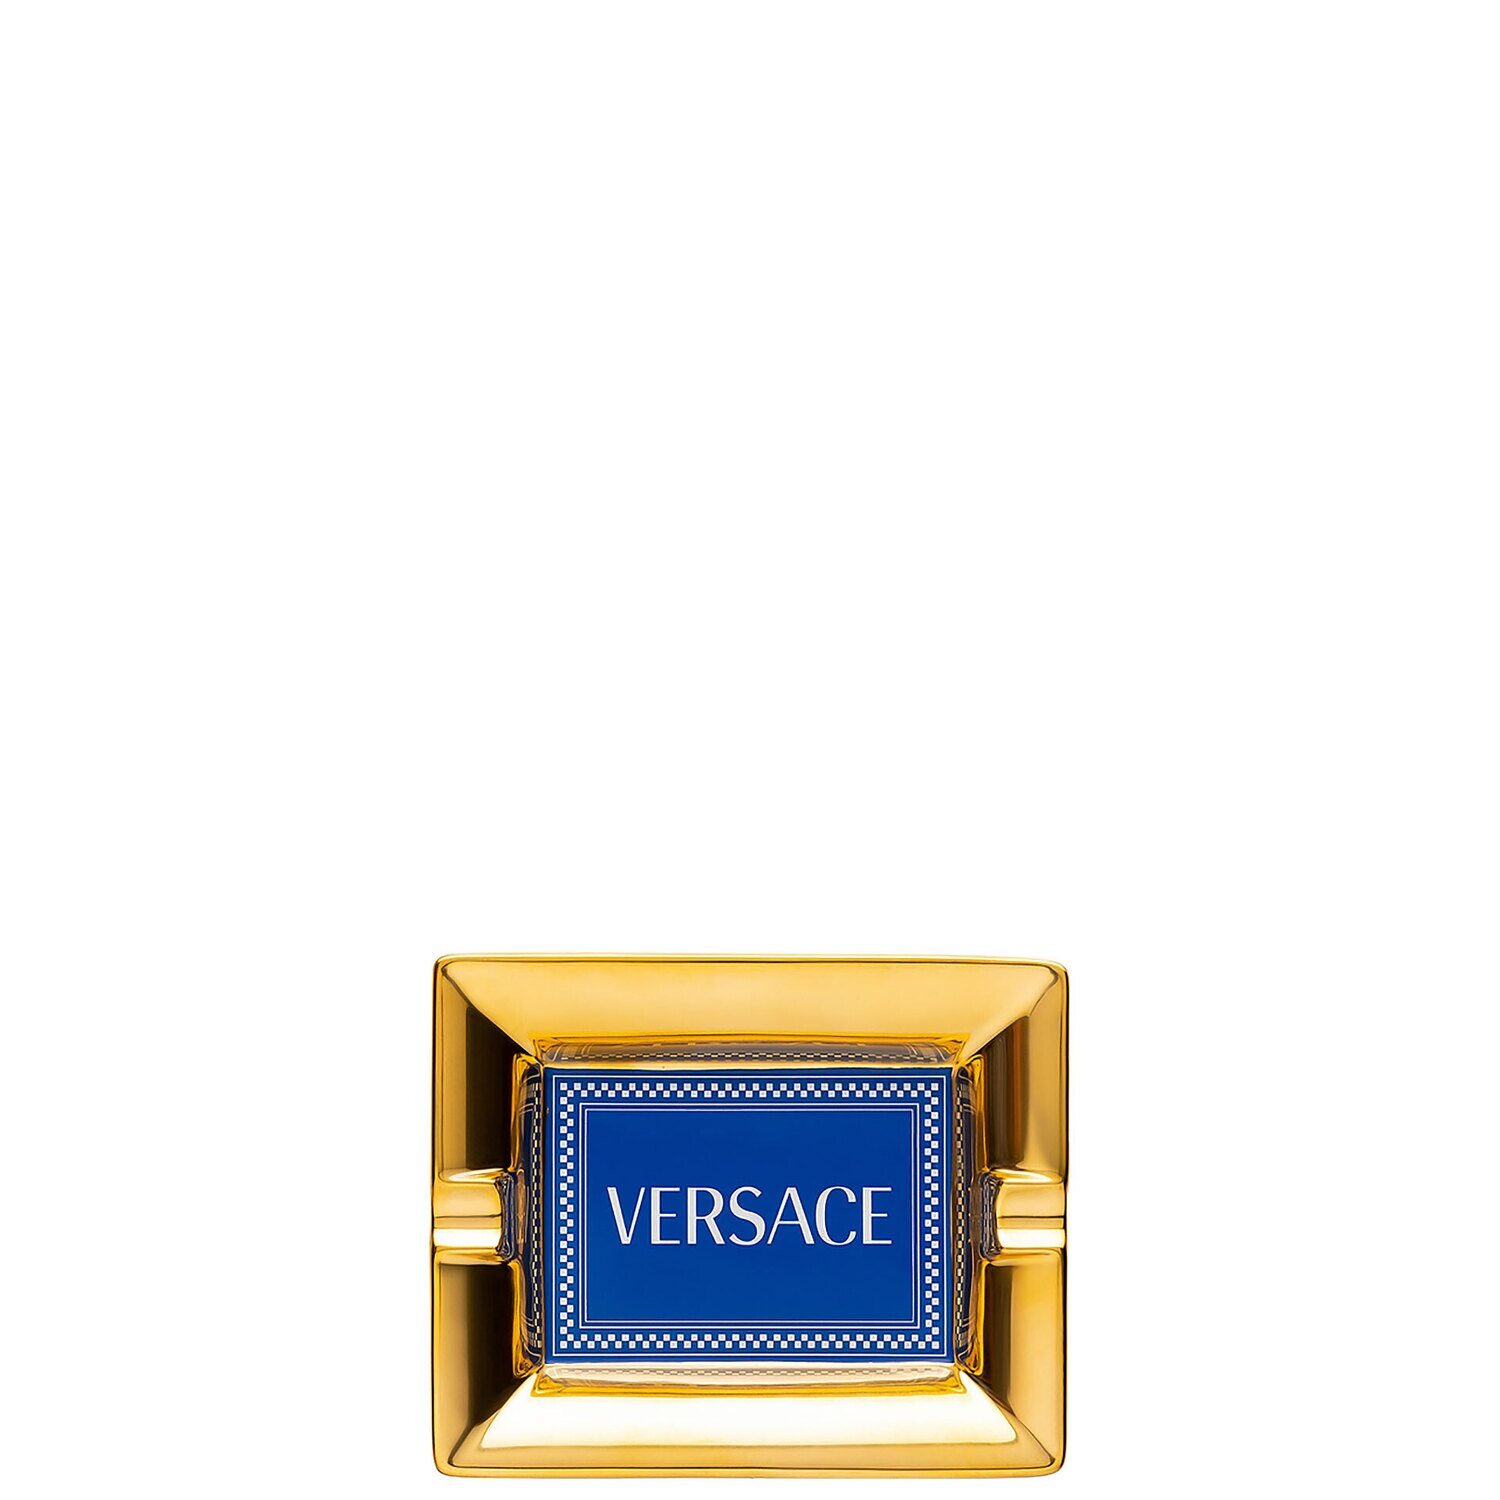 Versace Medusa Rhapsody Blue Ashtray 5 Inch